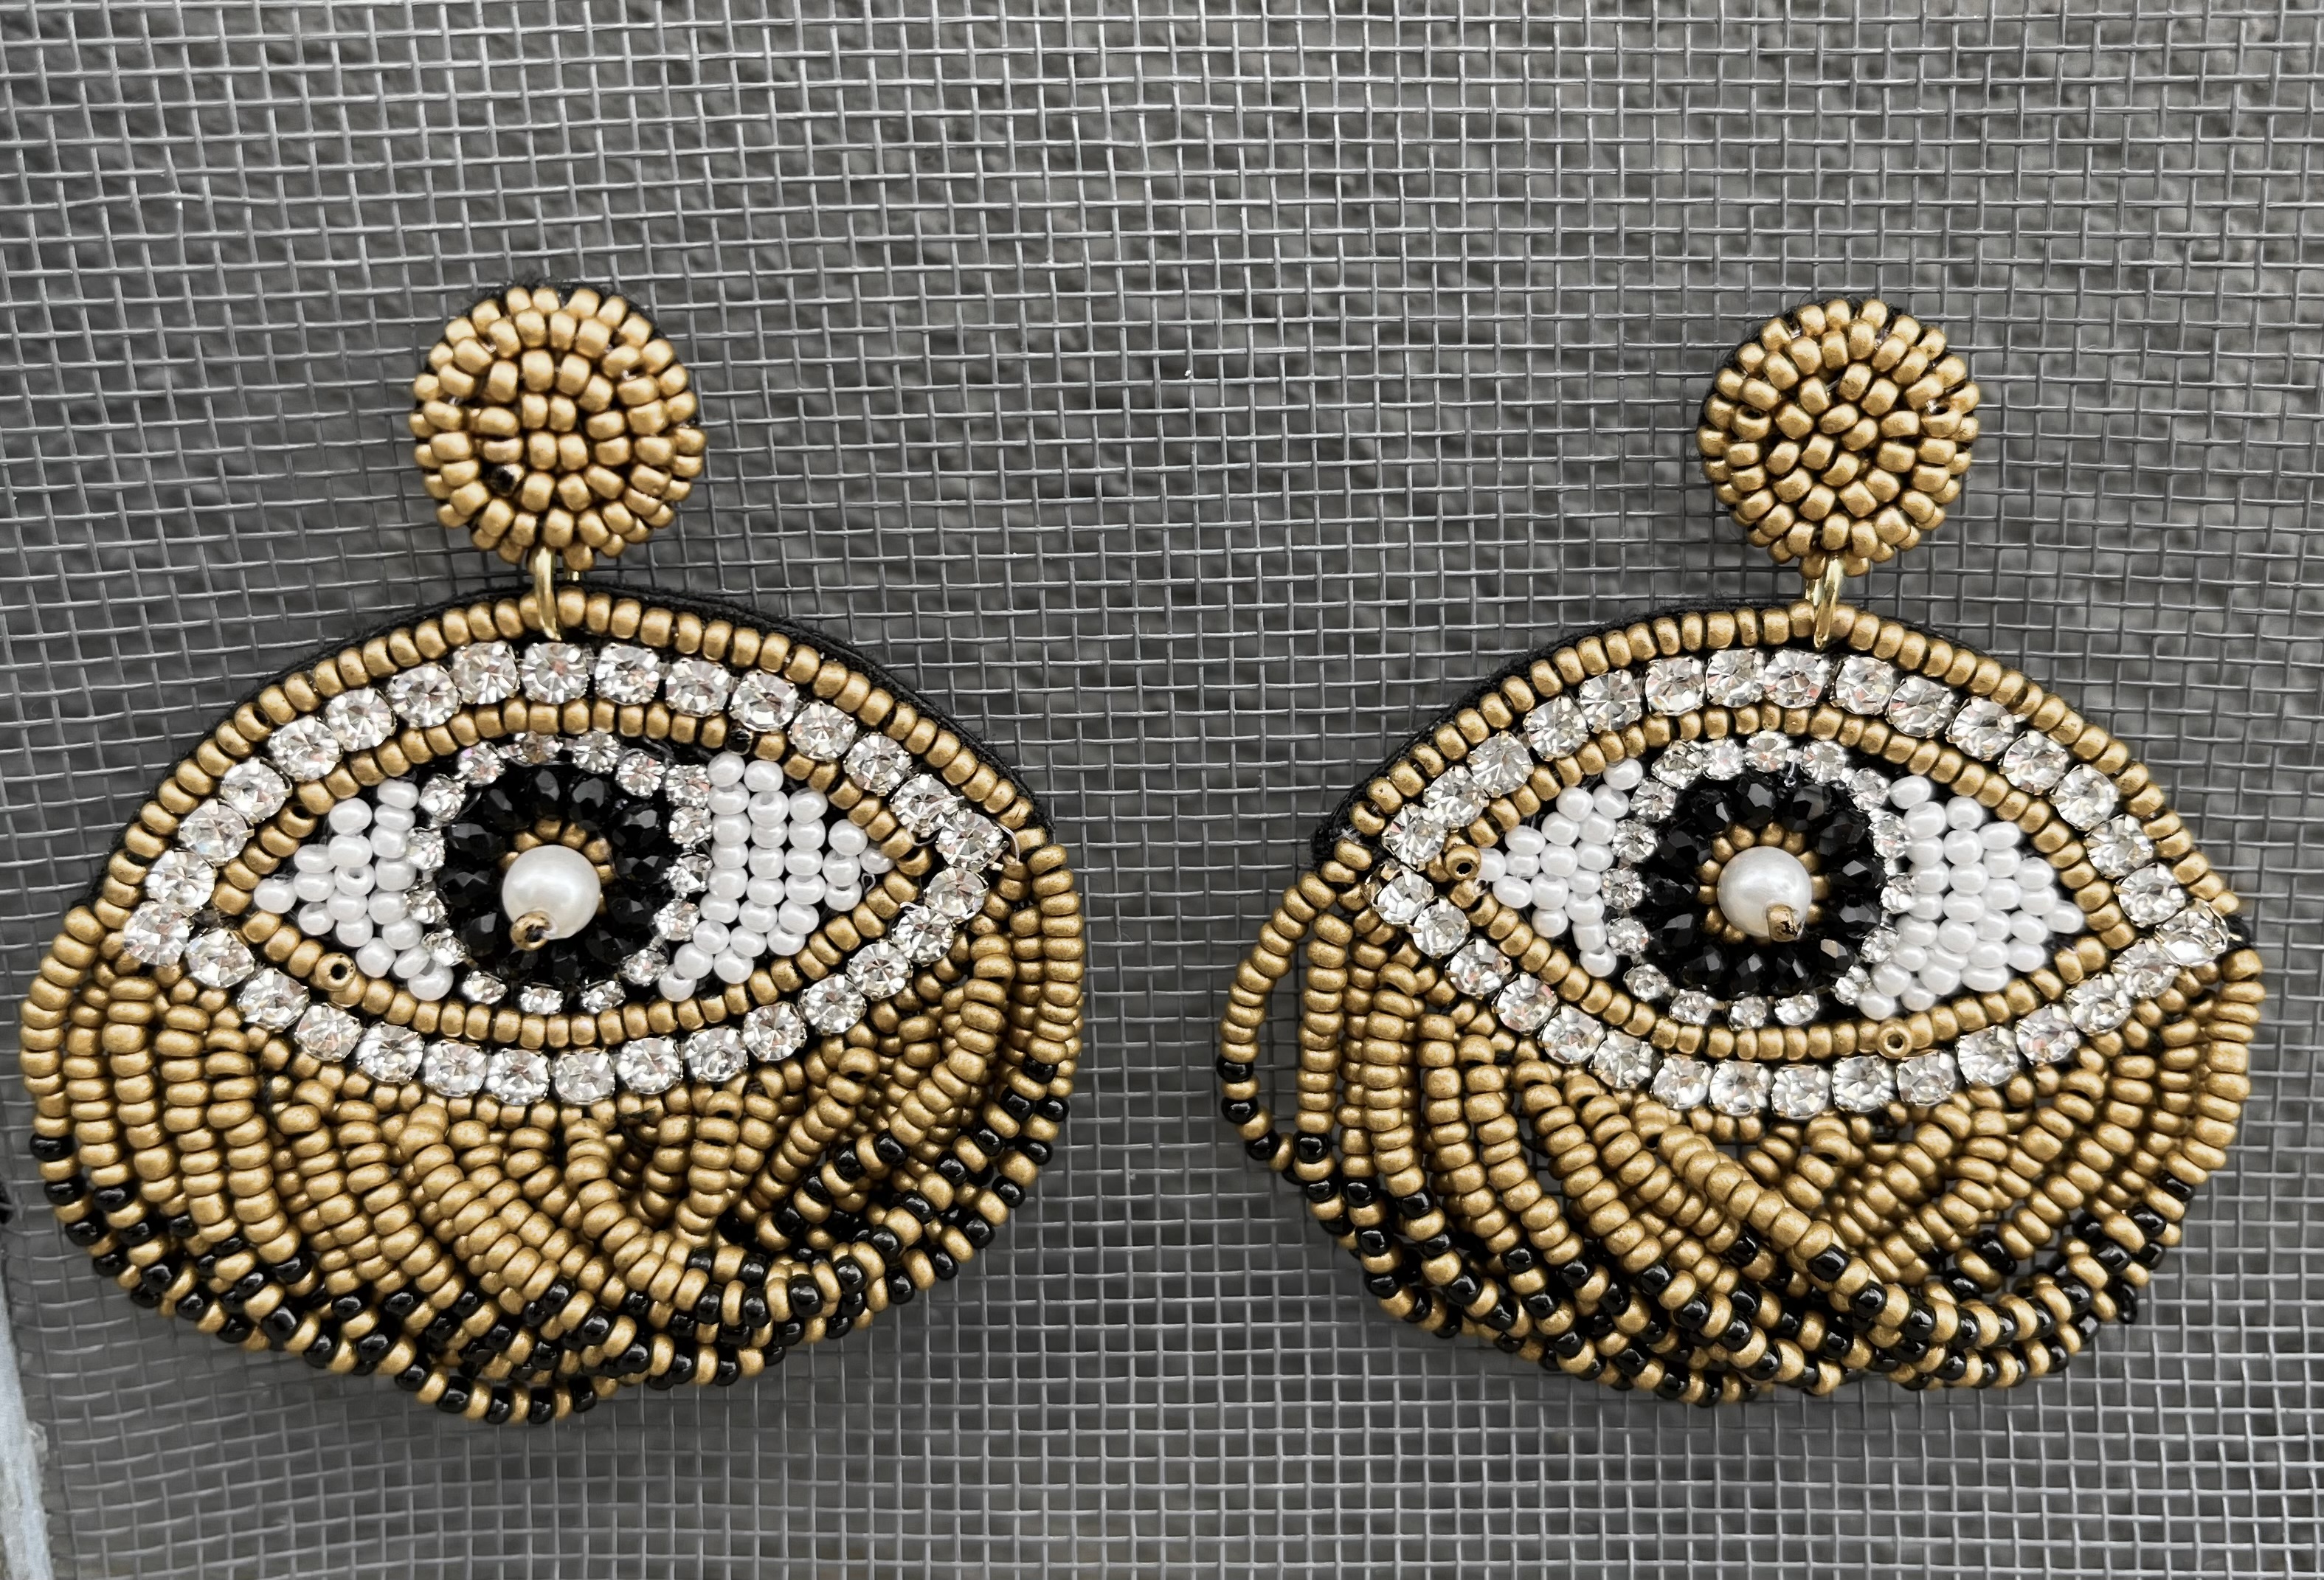 Gold/black  Eyes earrings